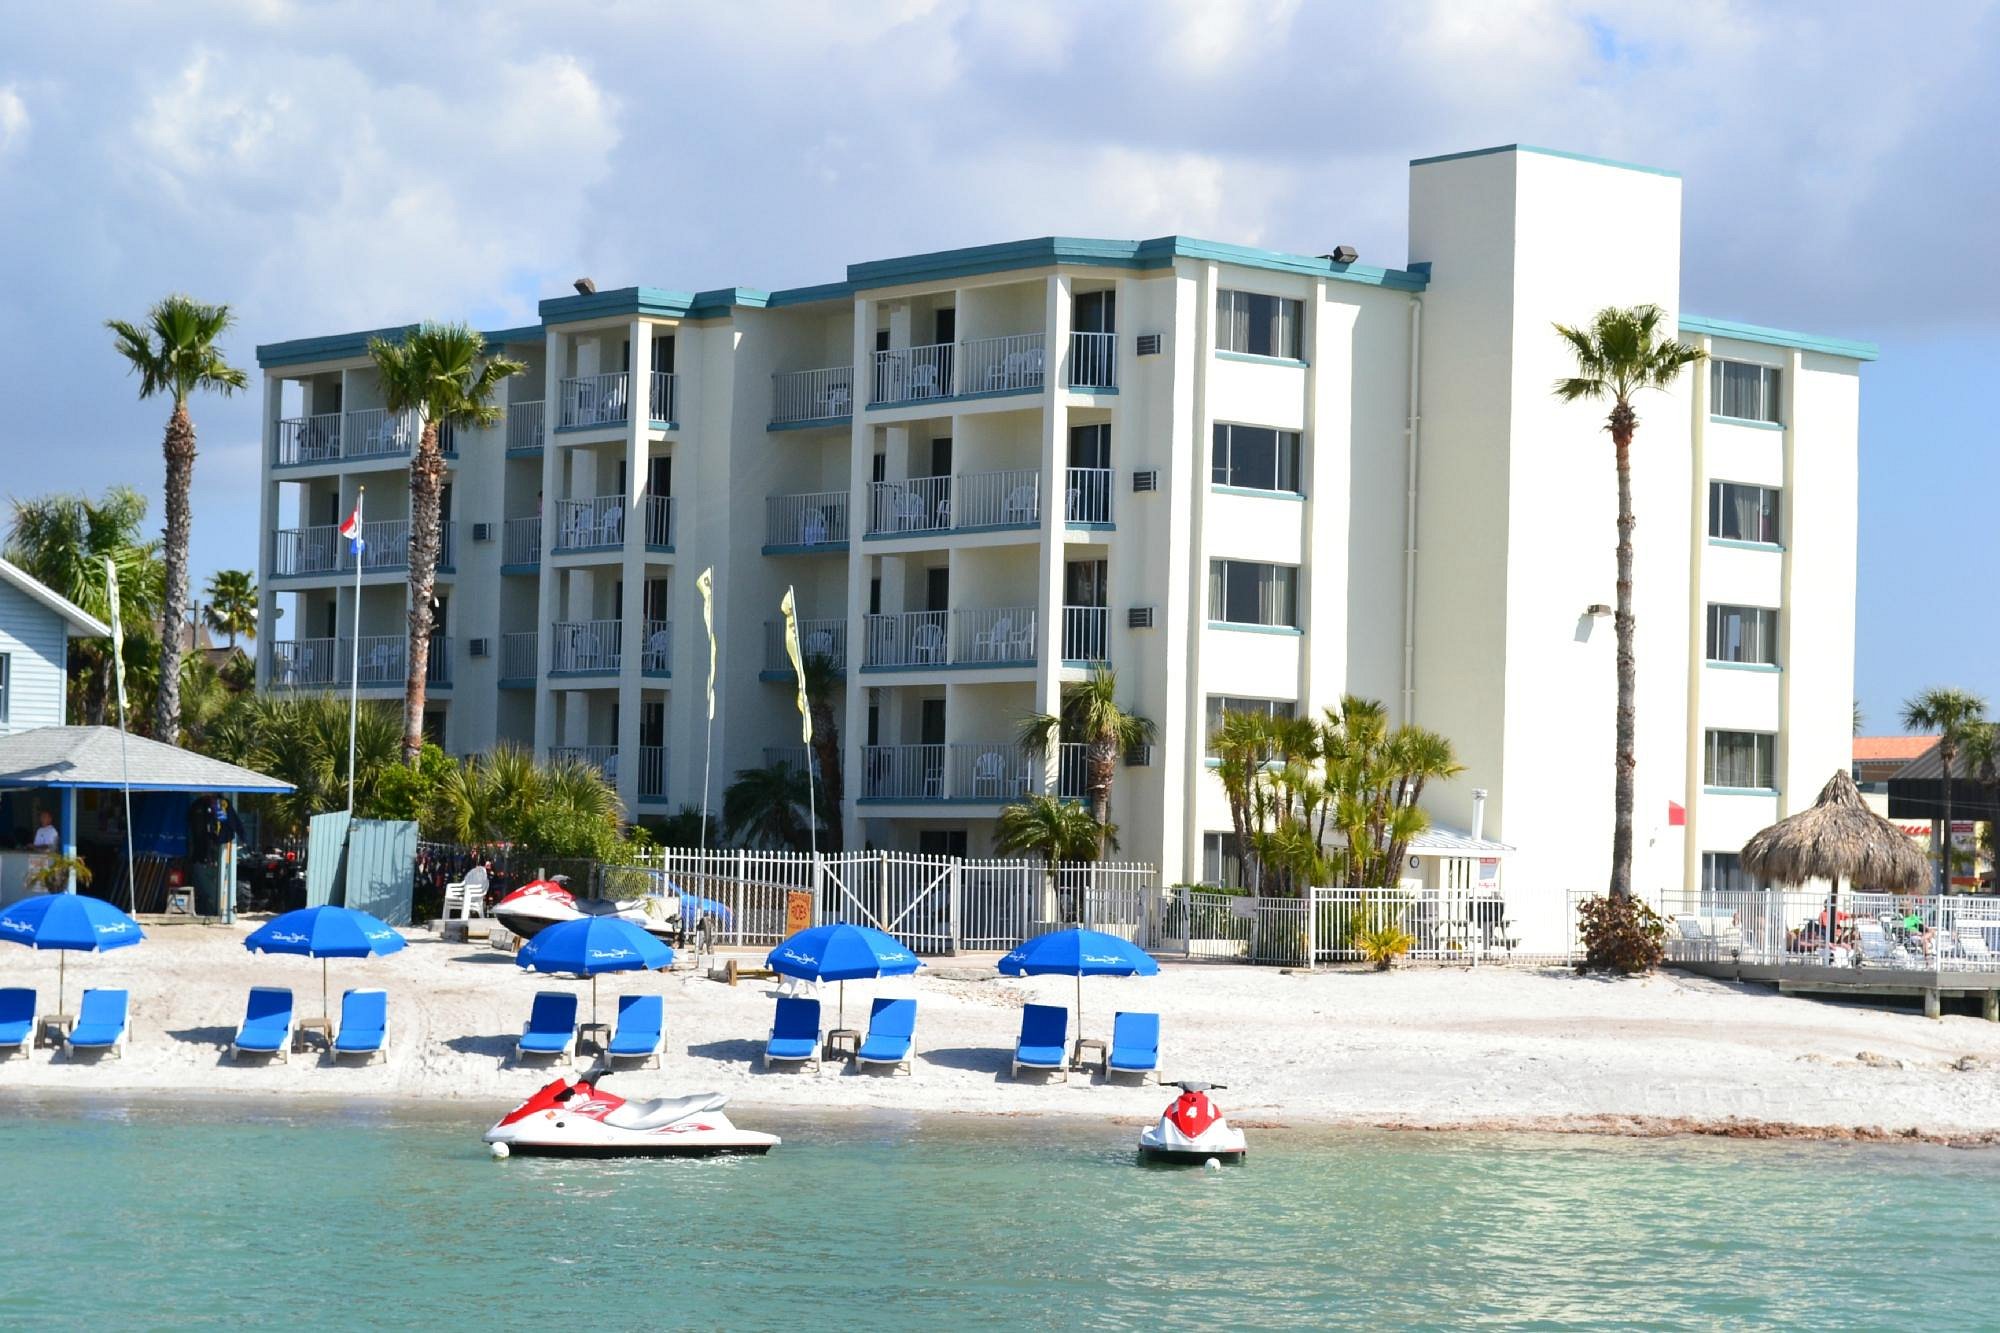 GULFVIEW HOTEL ON THE BEACH $139 ($̶1̶9̶7̶) - Updated 2022 Prices ...